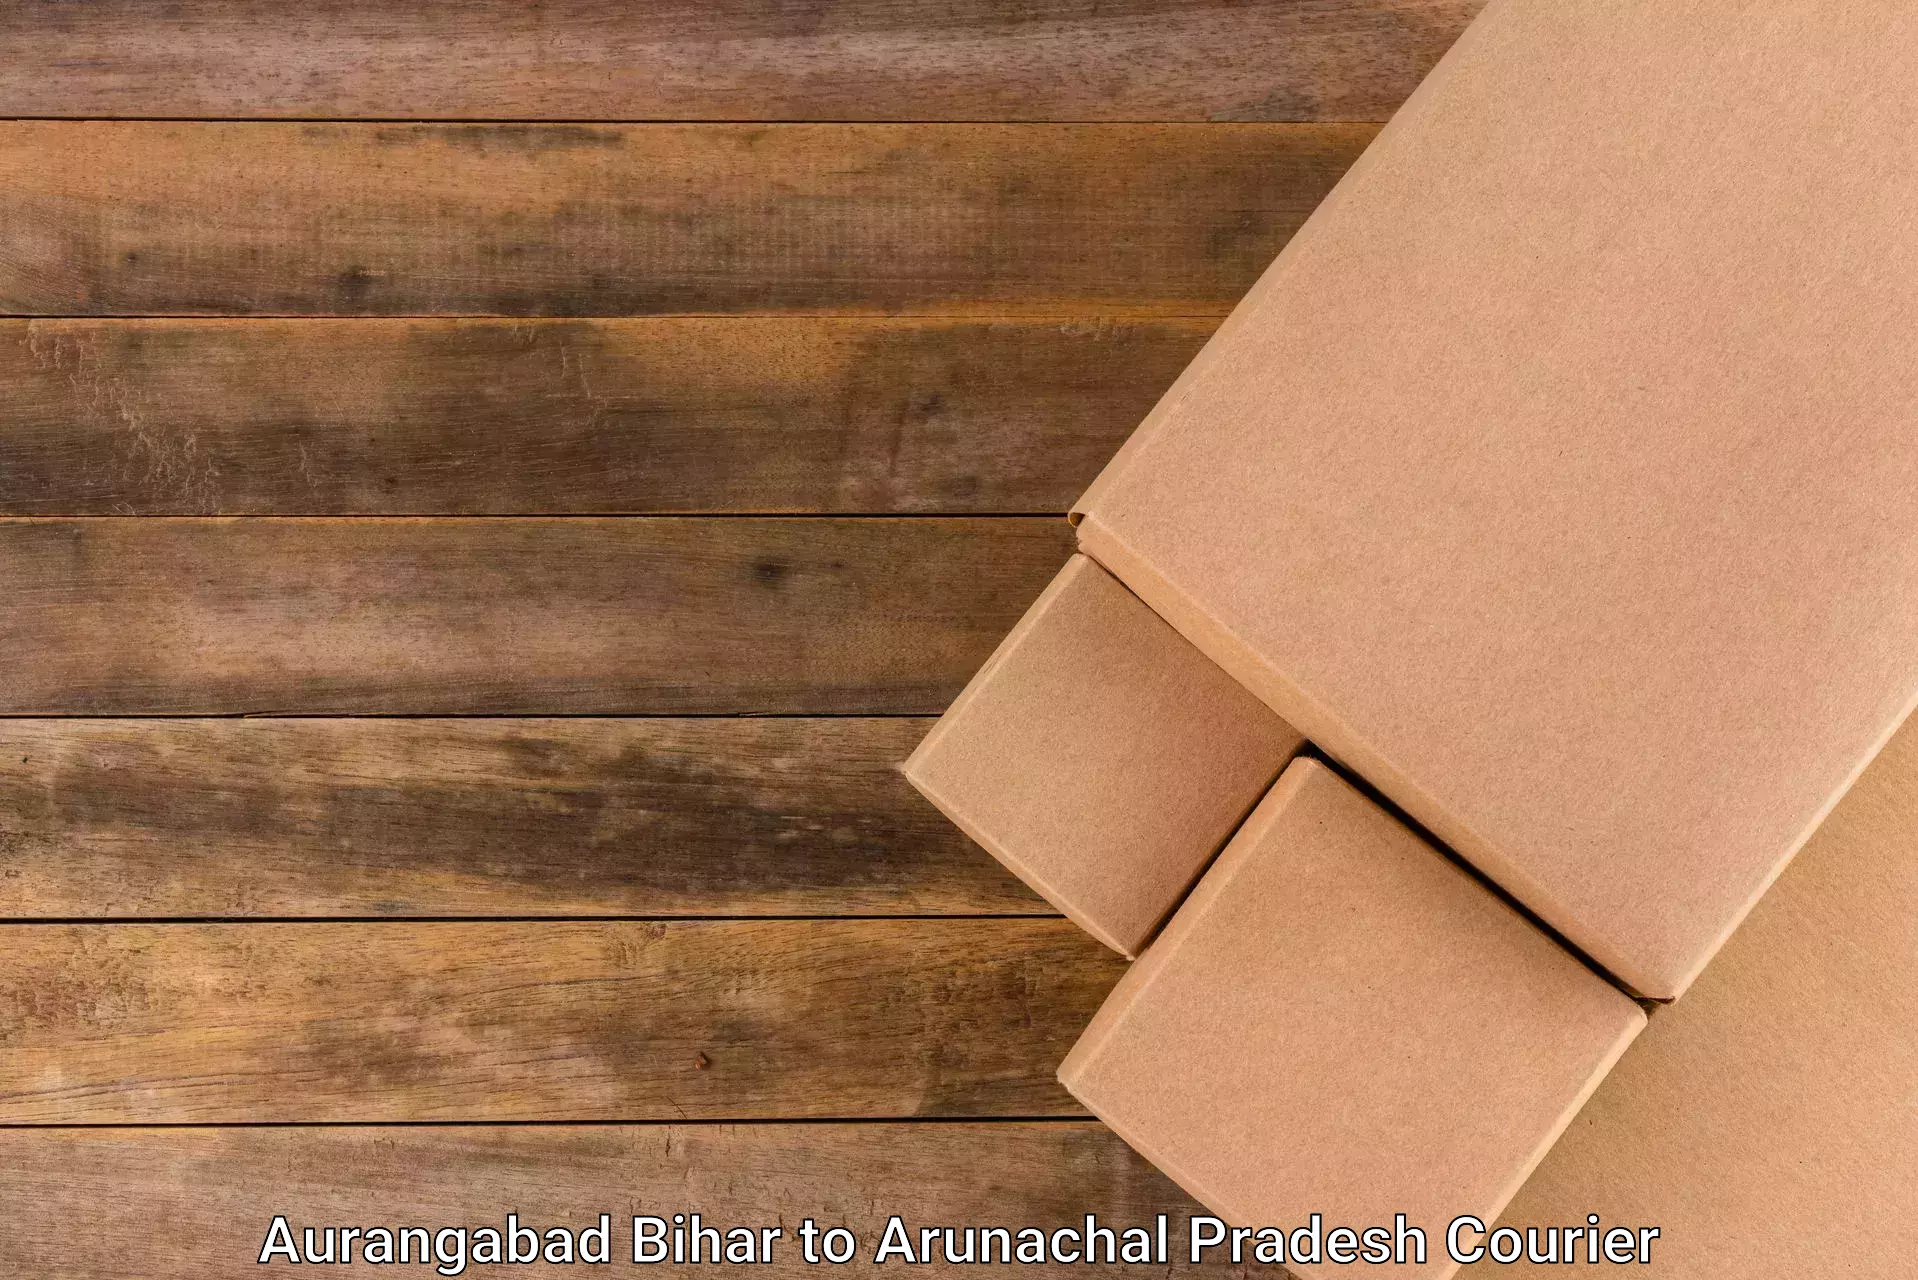 Large package courier Aurangabad Bihar to Khonsa